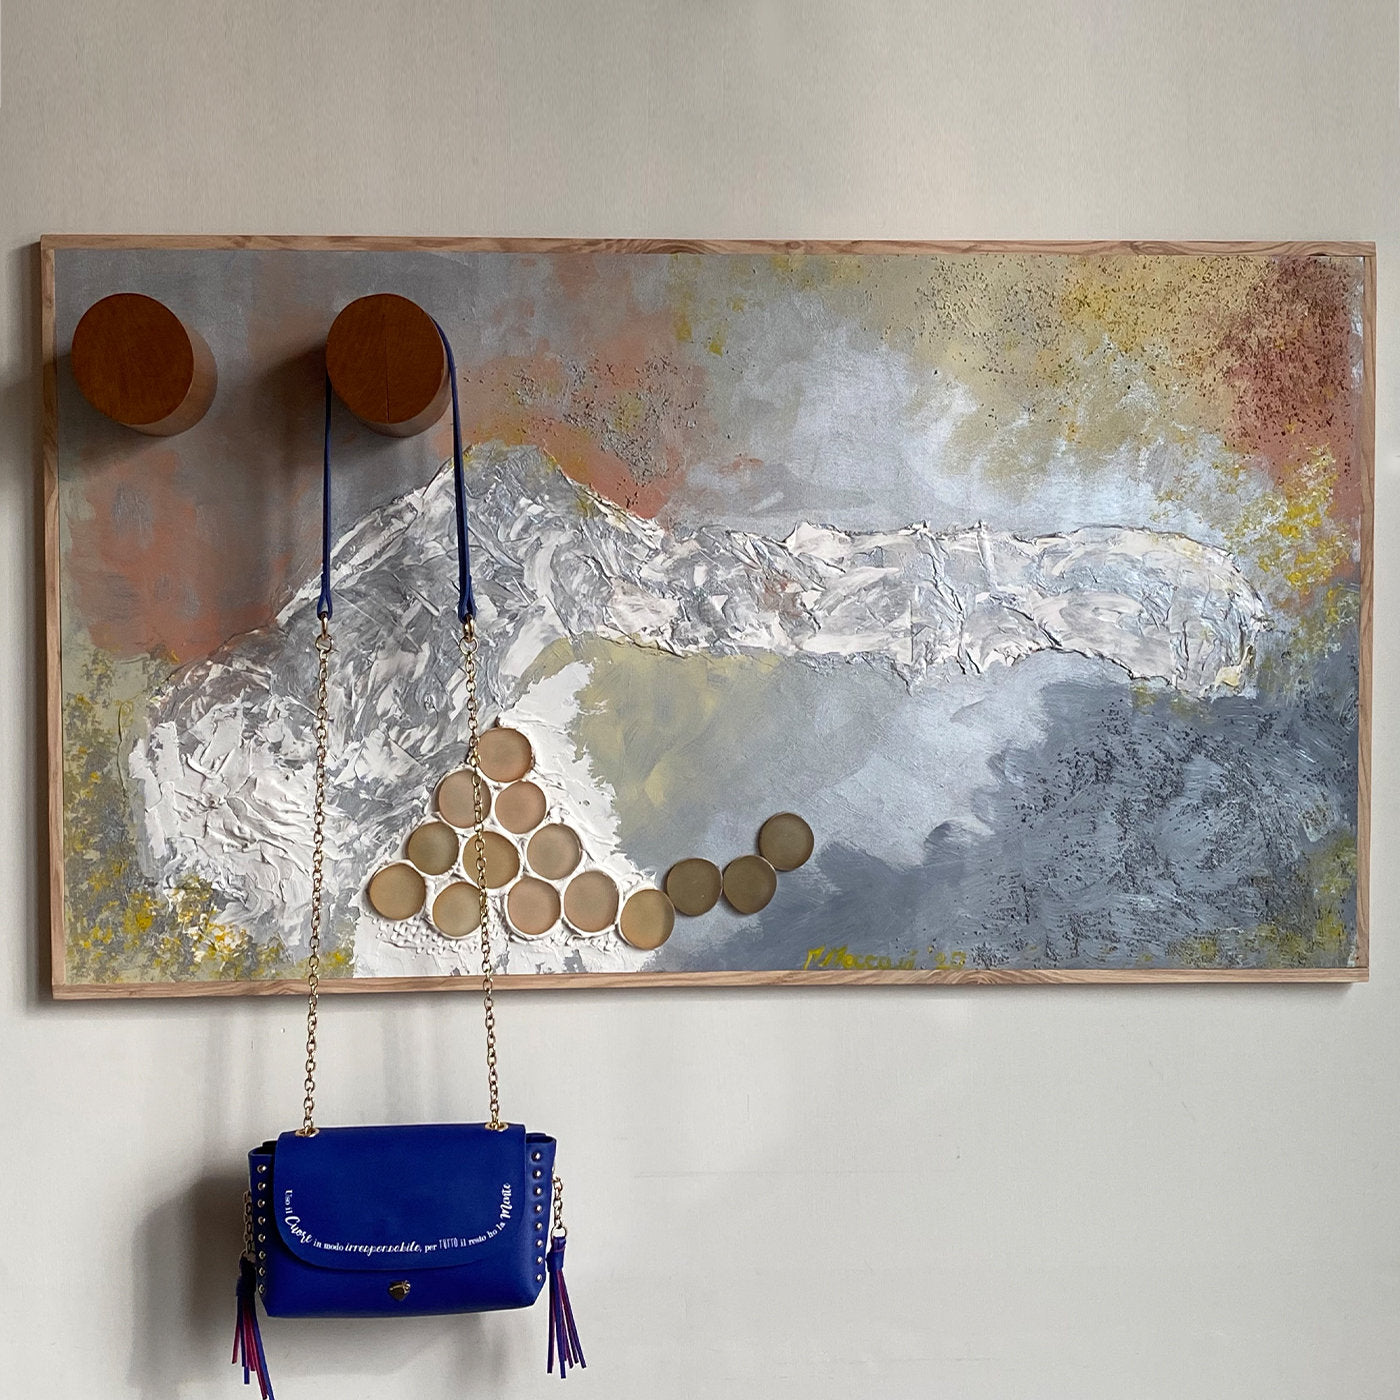 Tempesta Decorative Panel and Wall Hanger by Mascia Meccani - Alternative view 1